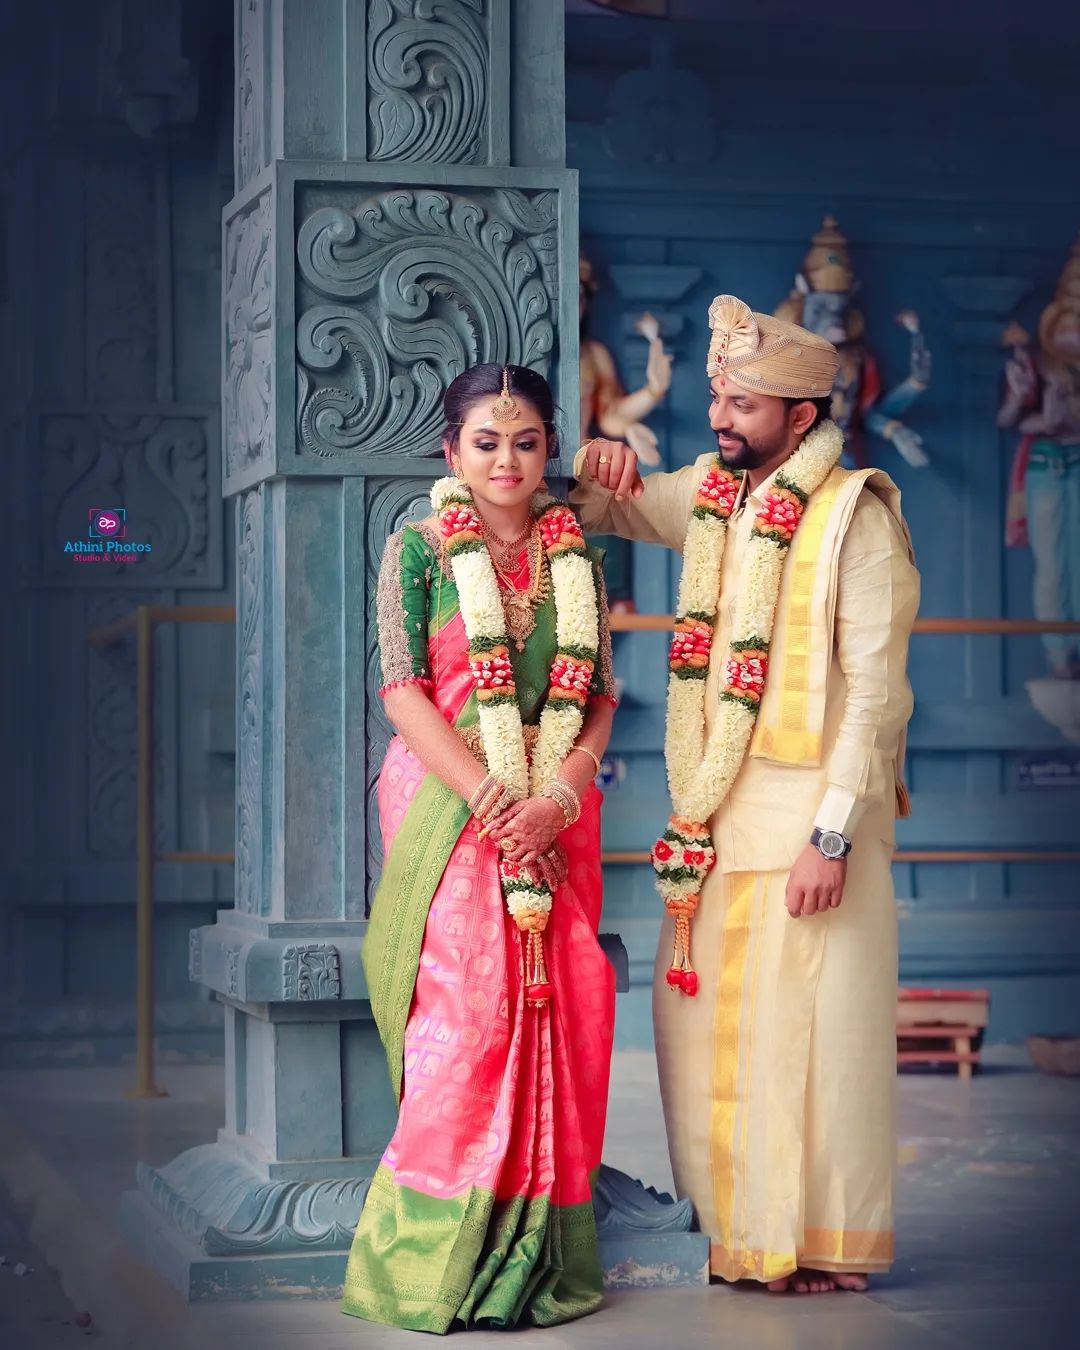 Jukrith S on LinkedIn: #wedding #makeupartist #makeover #chennai #mua # bridal #bride #bridetobe…